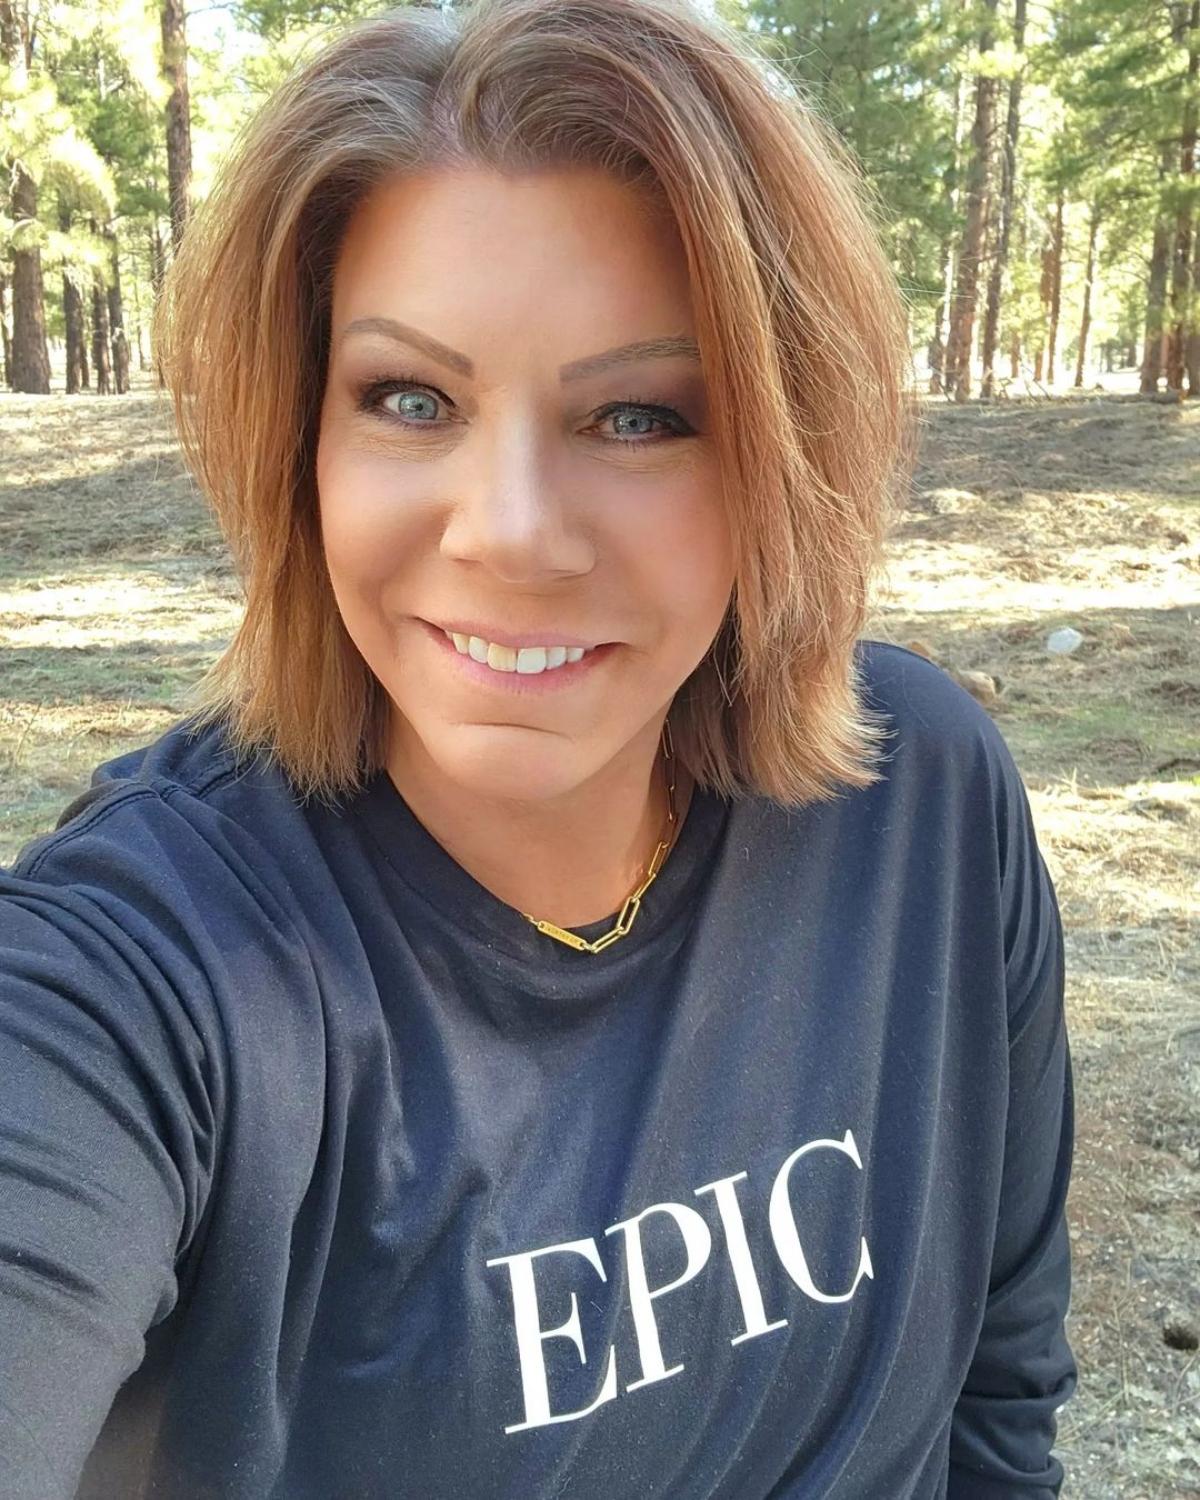 Meri Brown smiles outside wearing a black shirt that says "EPIC". 